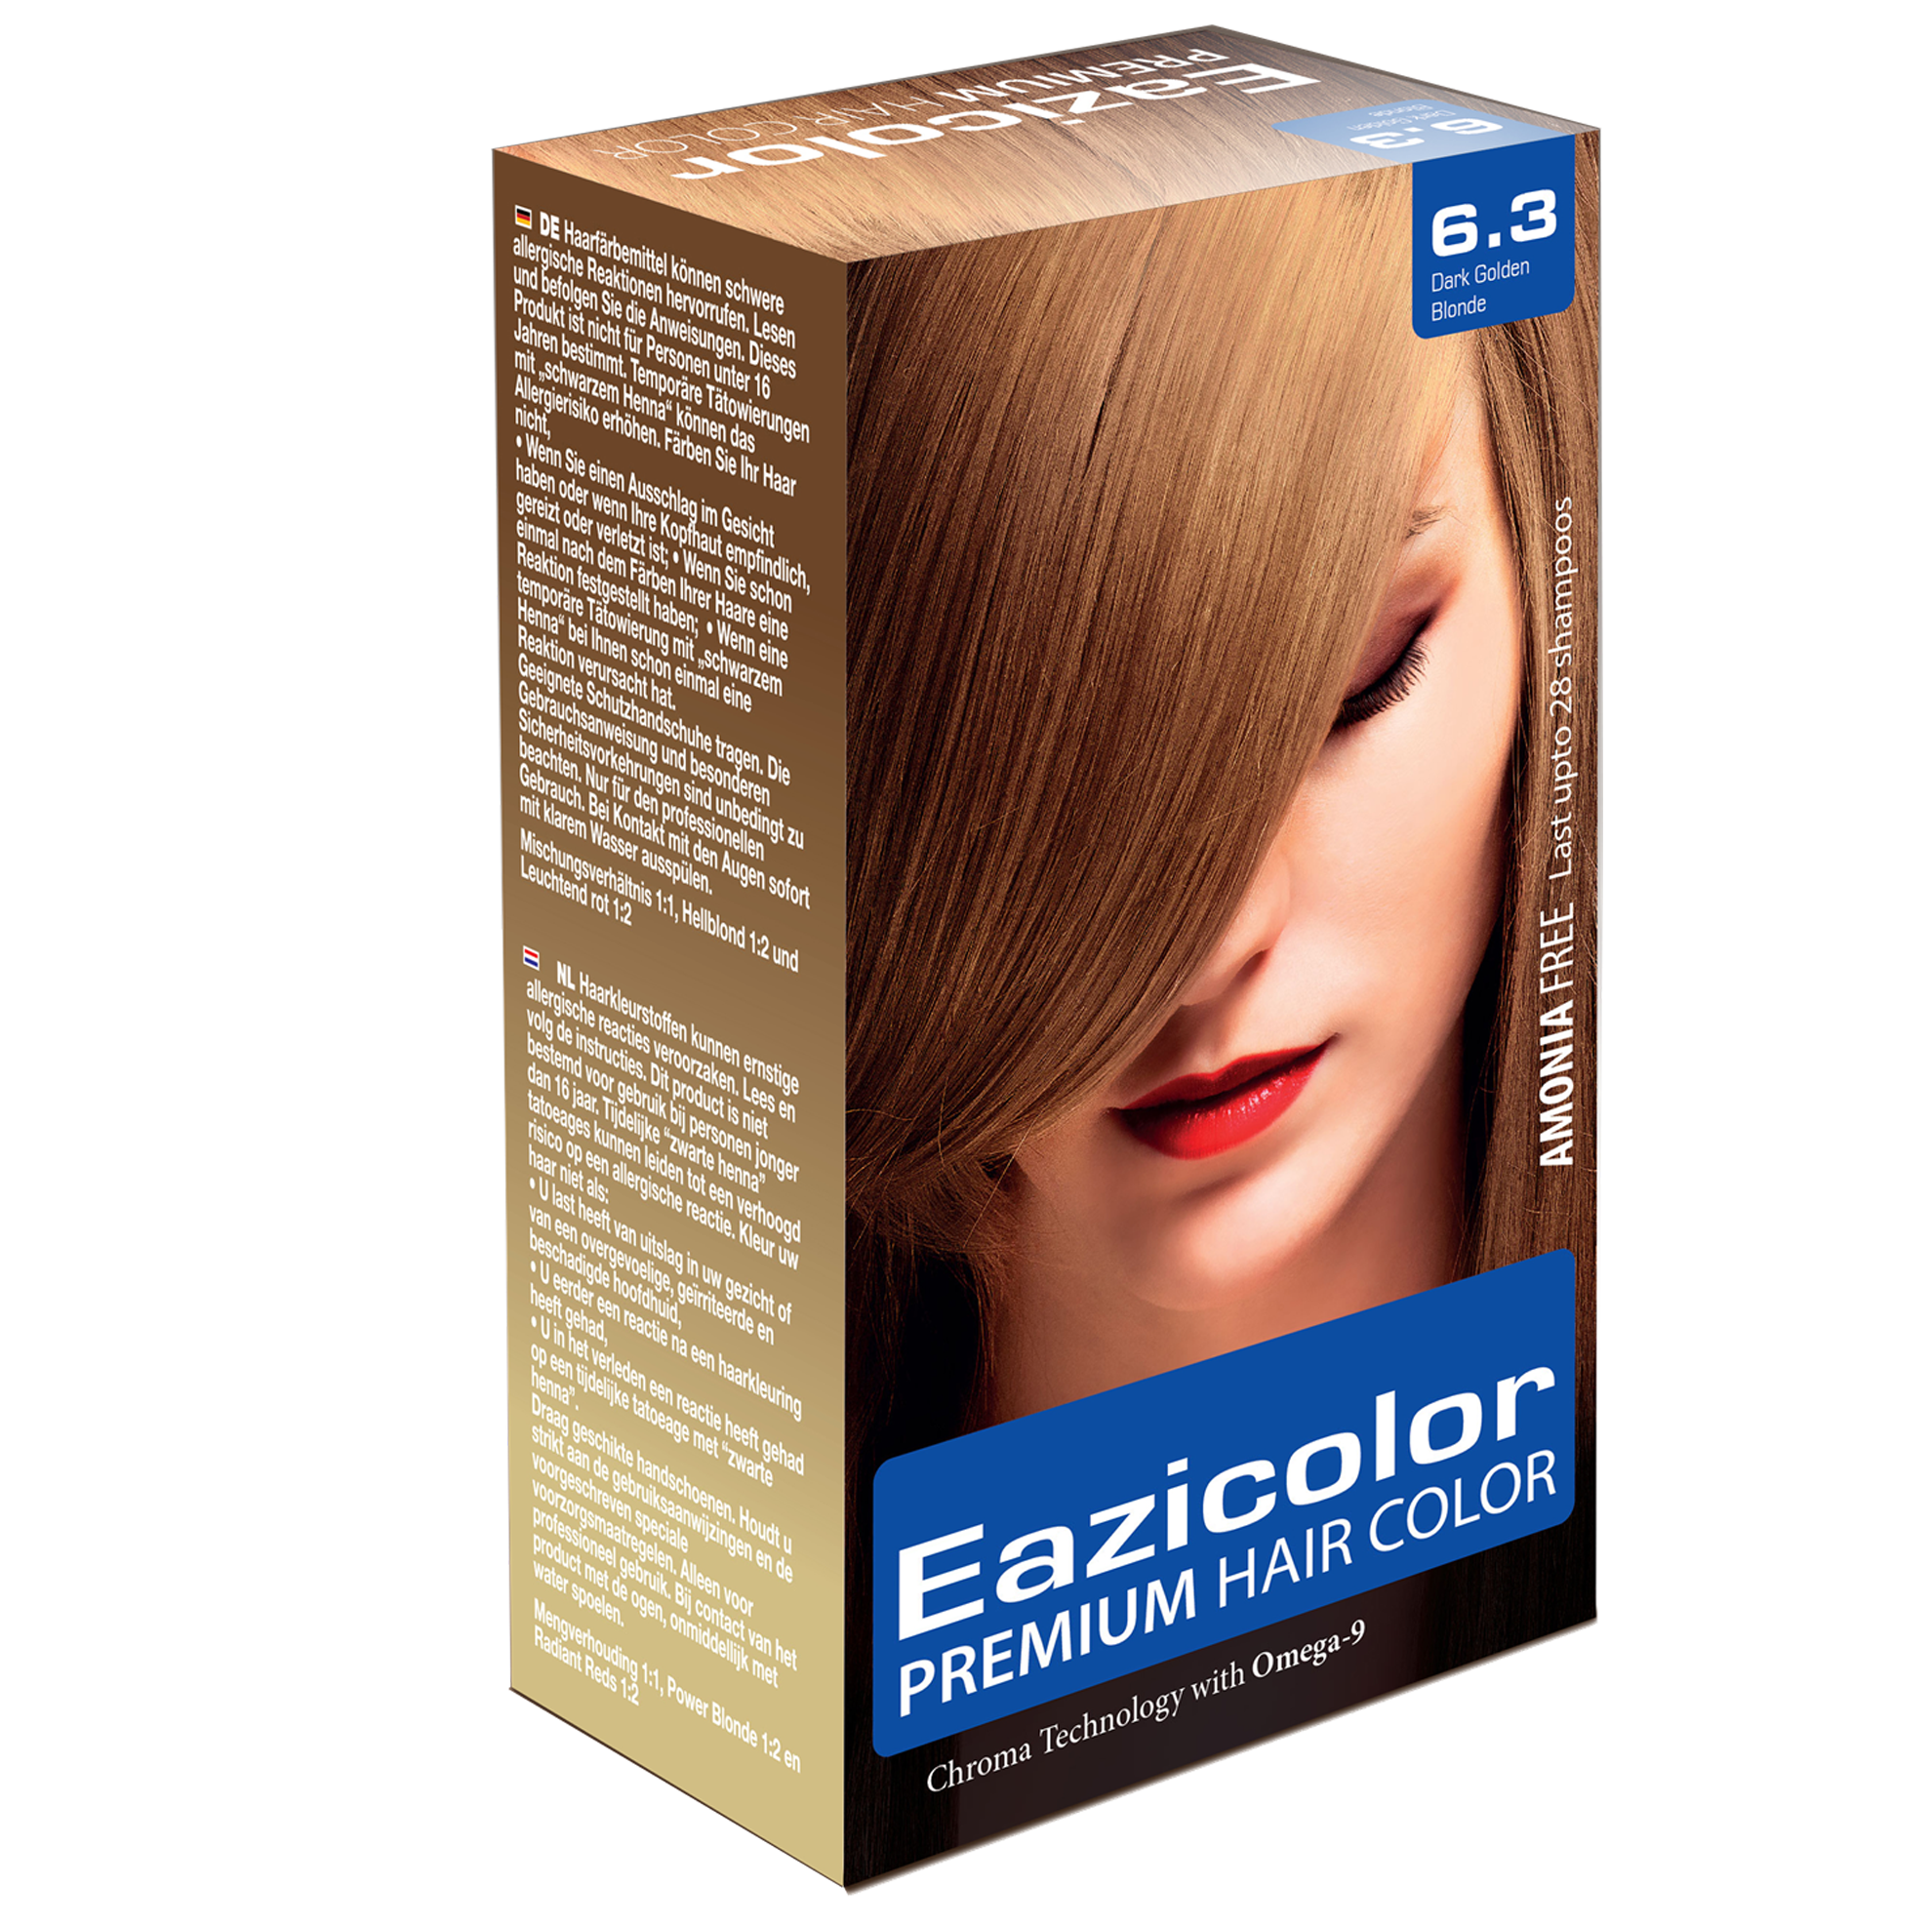 Eazicolor Premium Hair Color Kit For Women Dark Golden Blonde  | ezMarket